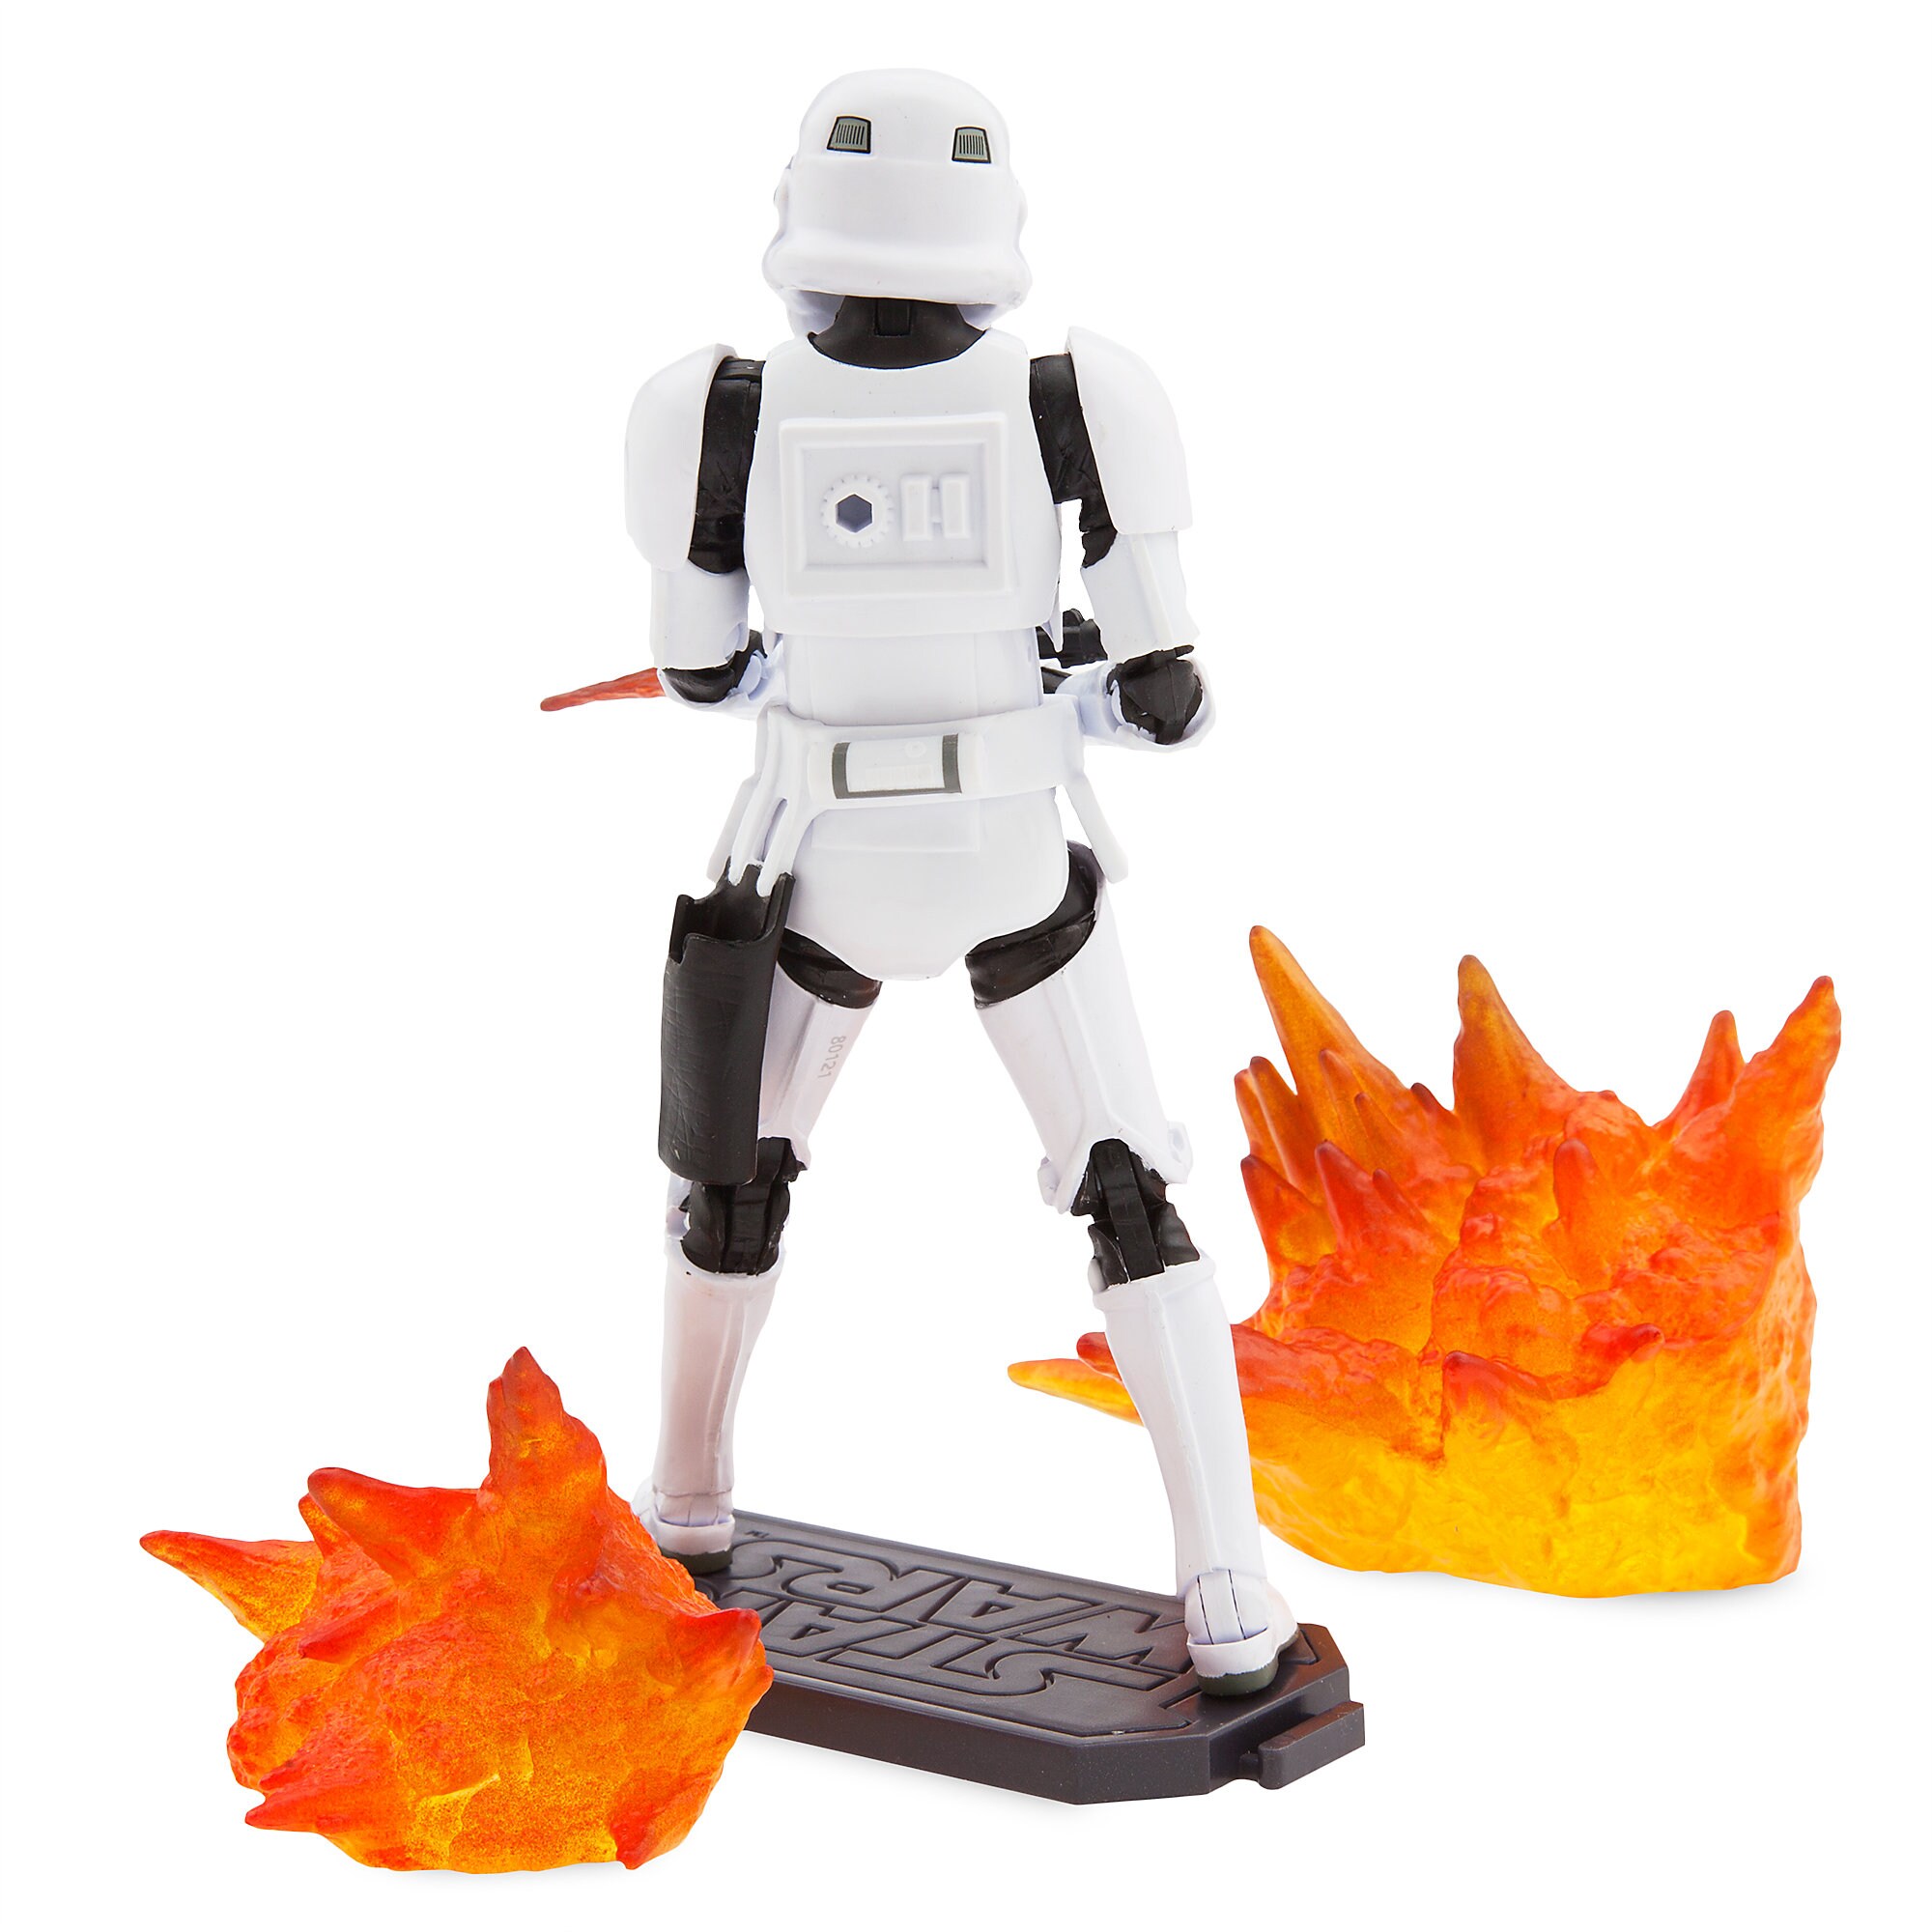 Stormtrooper Action Figure - Star Wars - Black Series by Hasbro